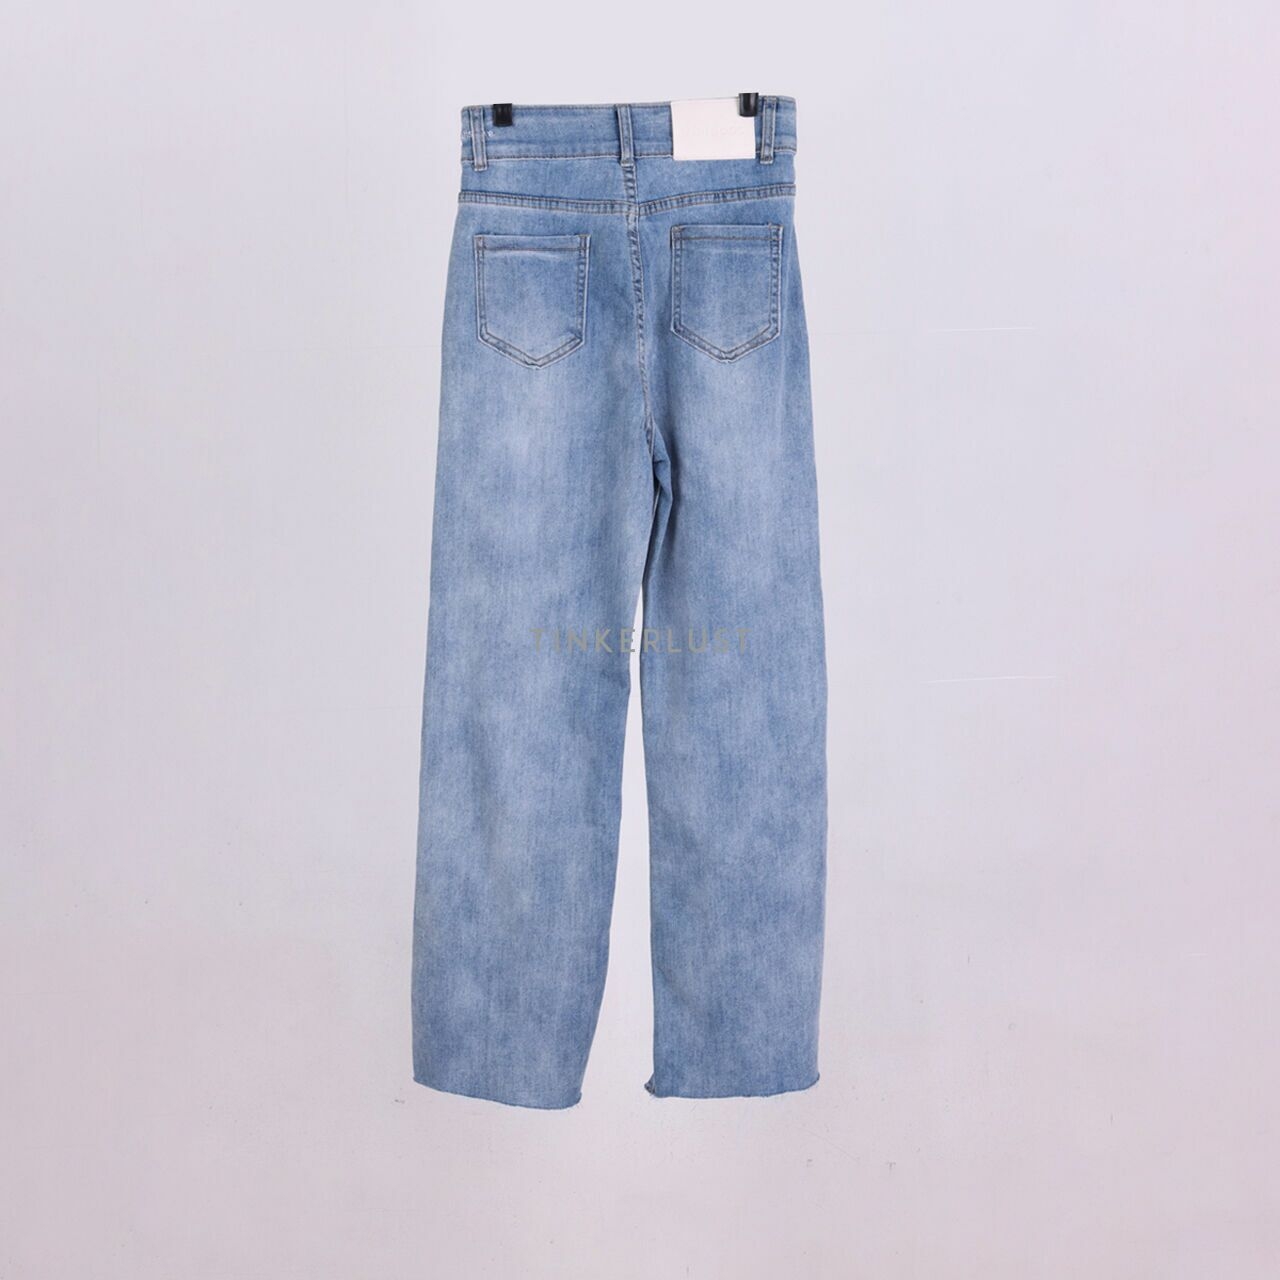 Herspot Blue Unfinished Jeans Long Pants